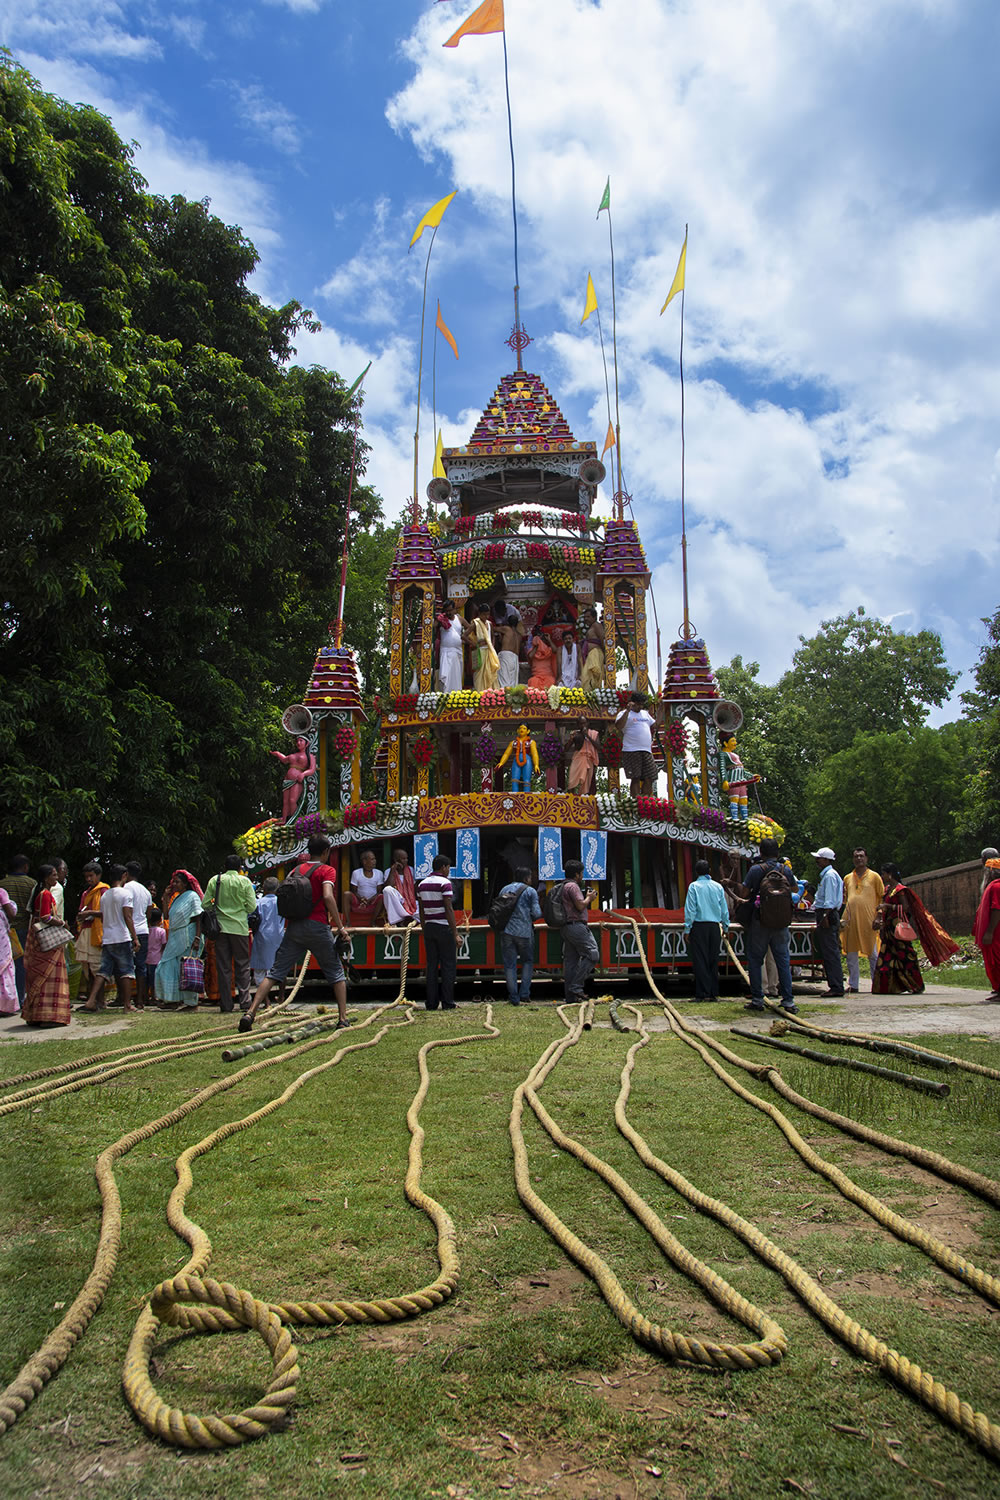 Rathayatra Chariot Festival By Sudipta Chatterjee